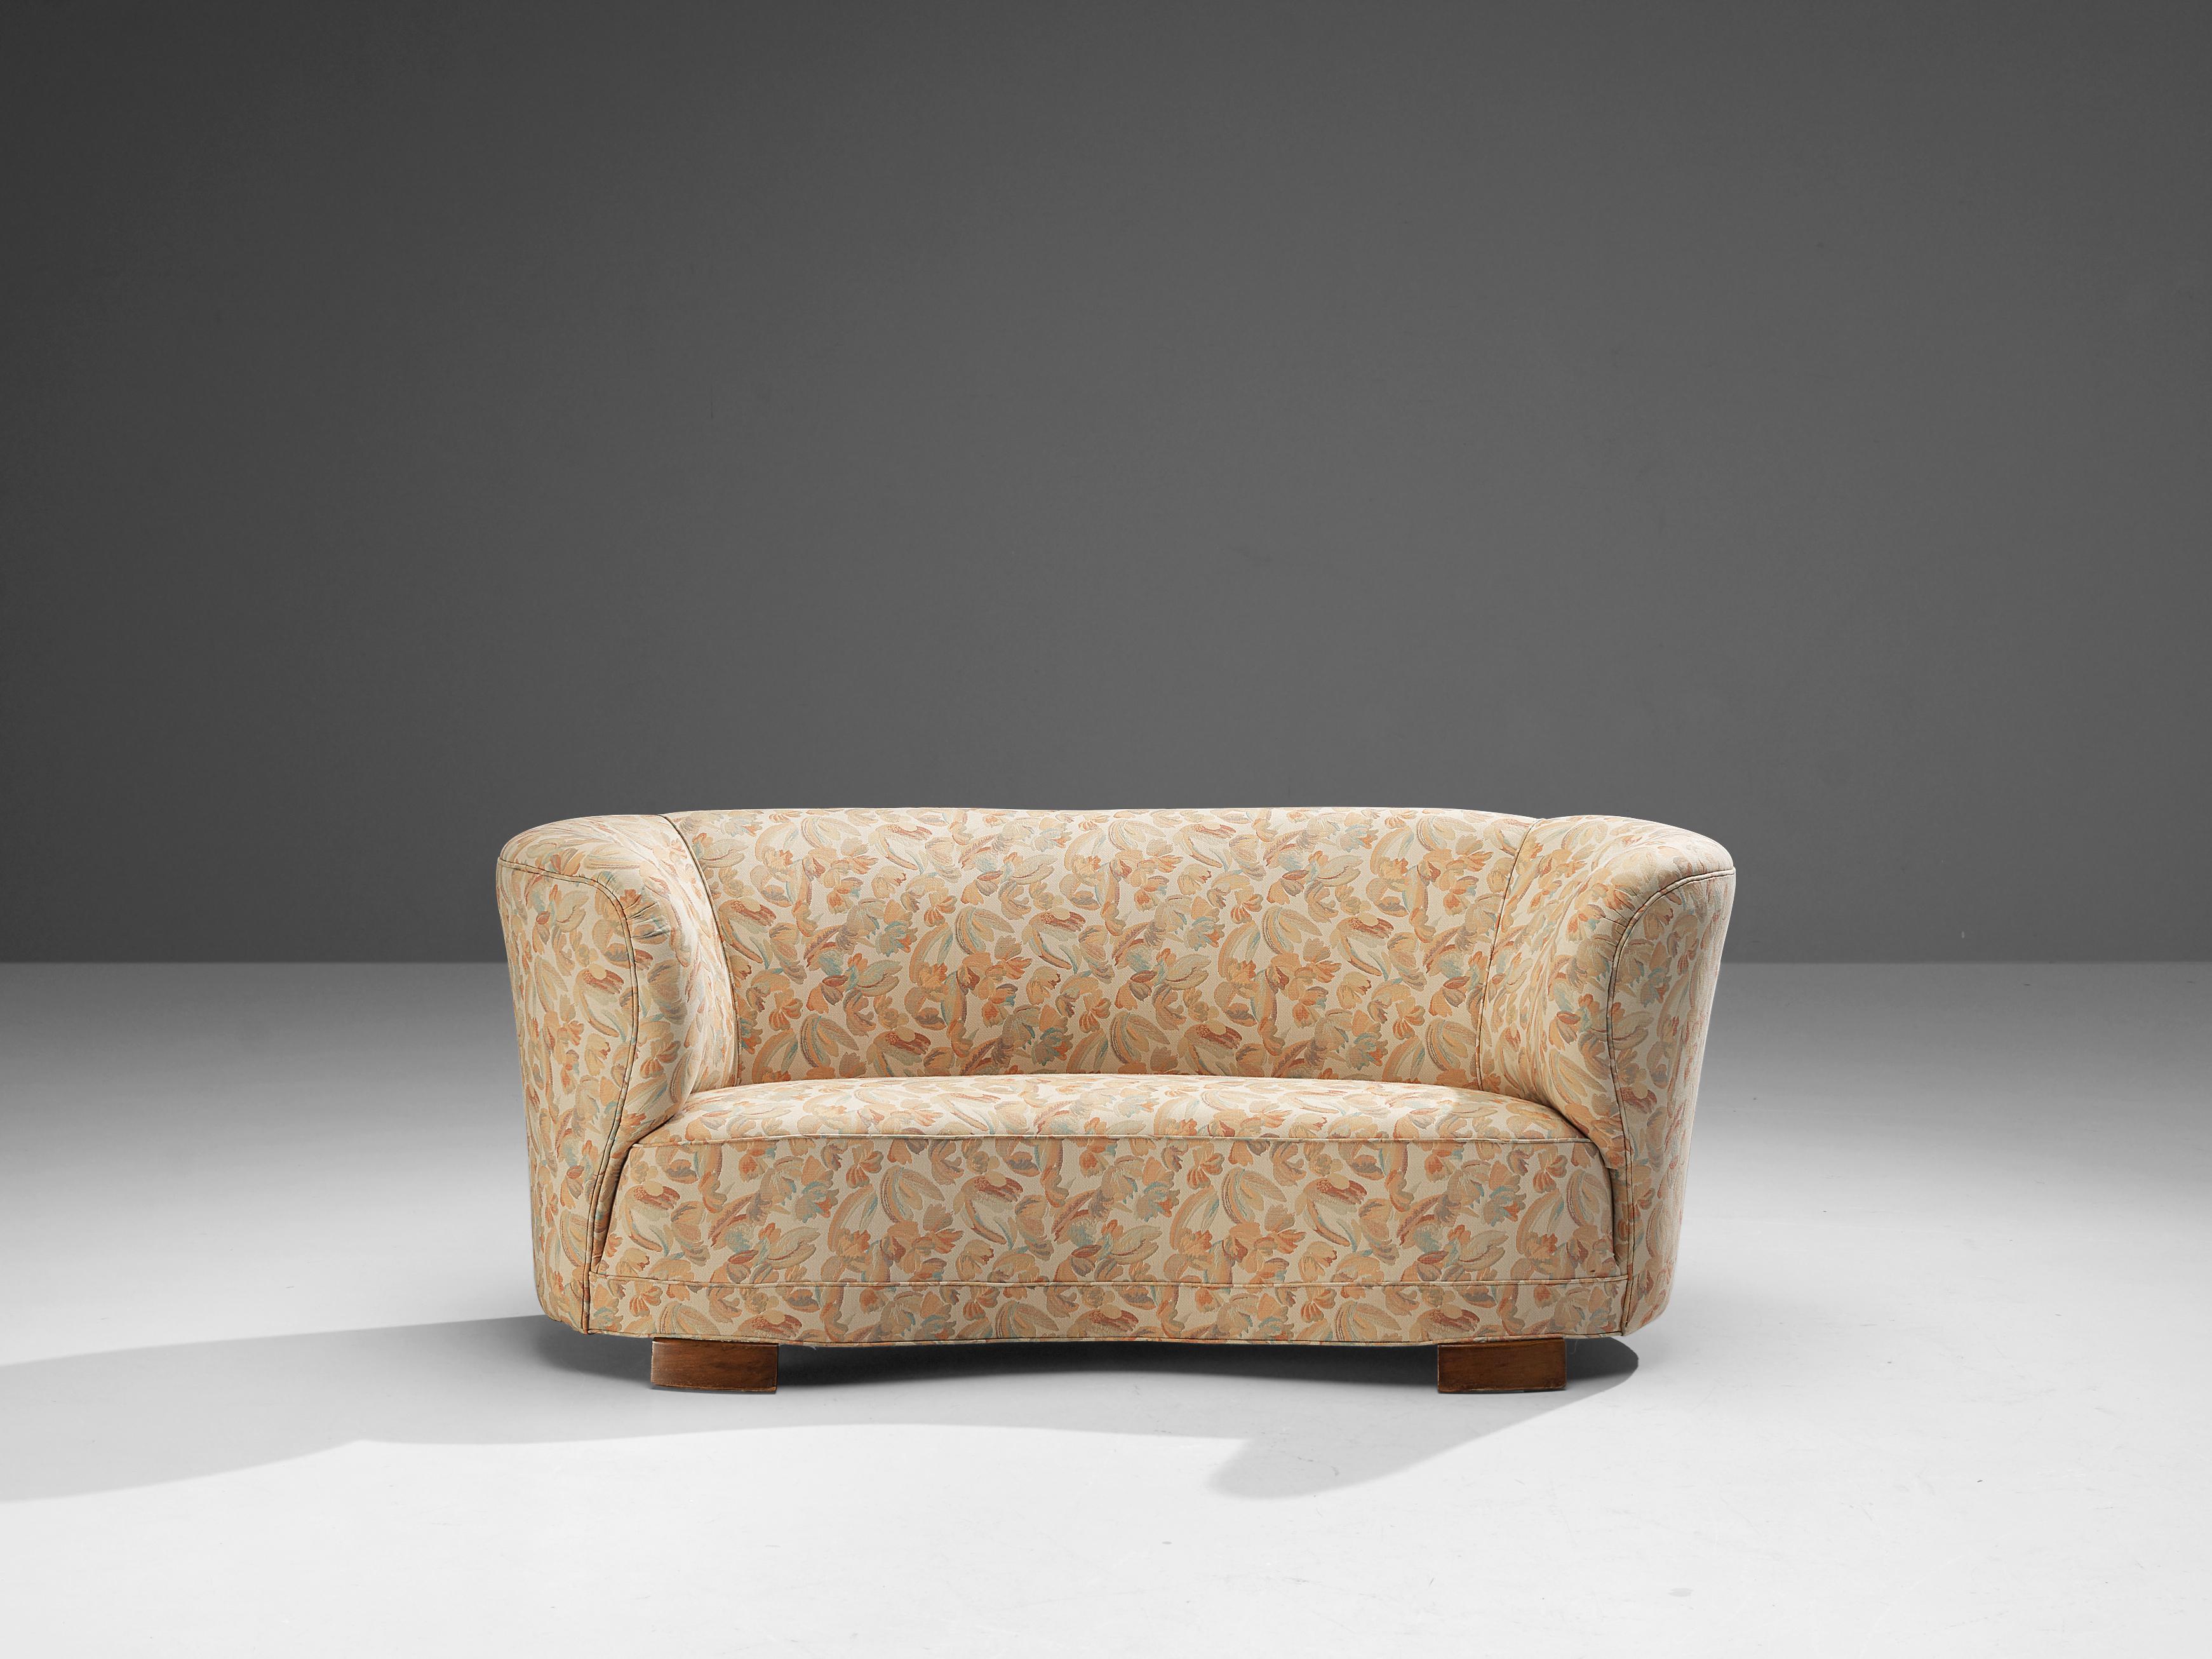 Fabric Danish 'Banana' Sofa in Floral Upholstery